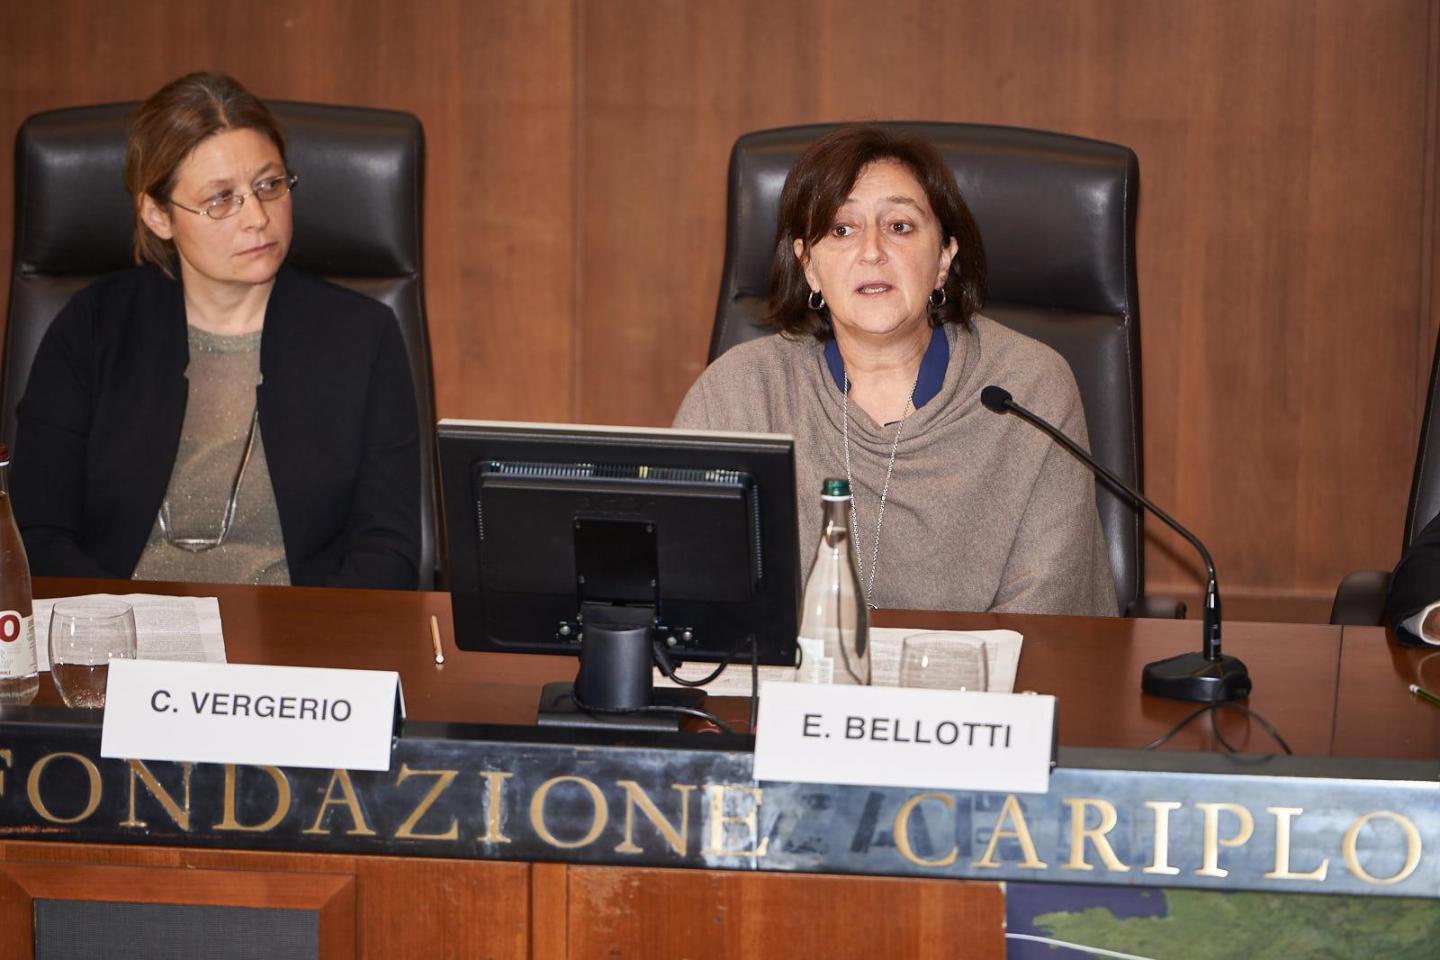 Emanuela Bellotti, Member of the Education Commission 